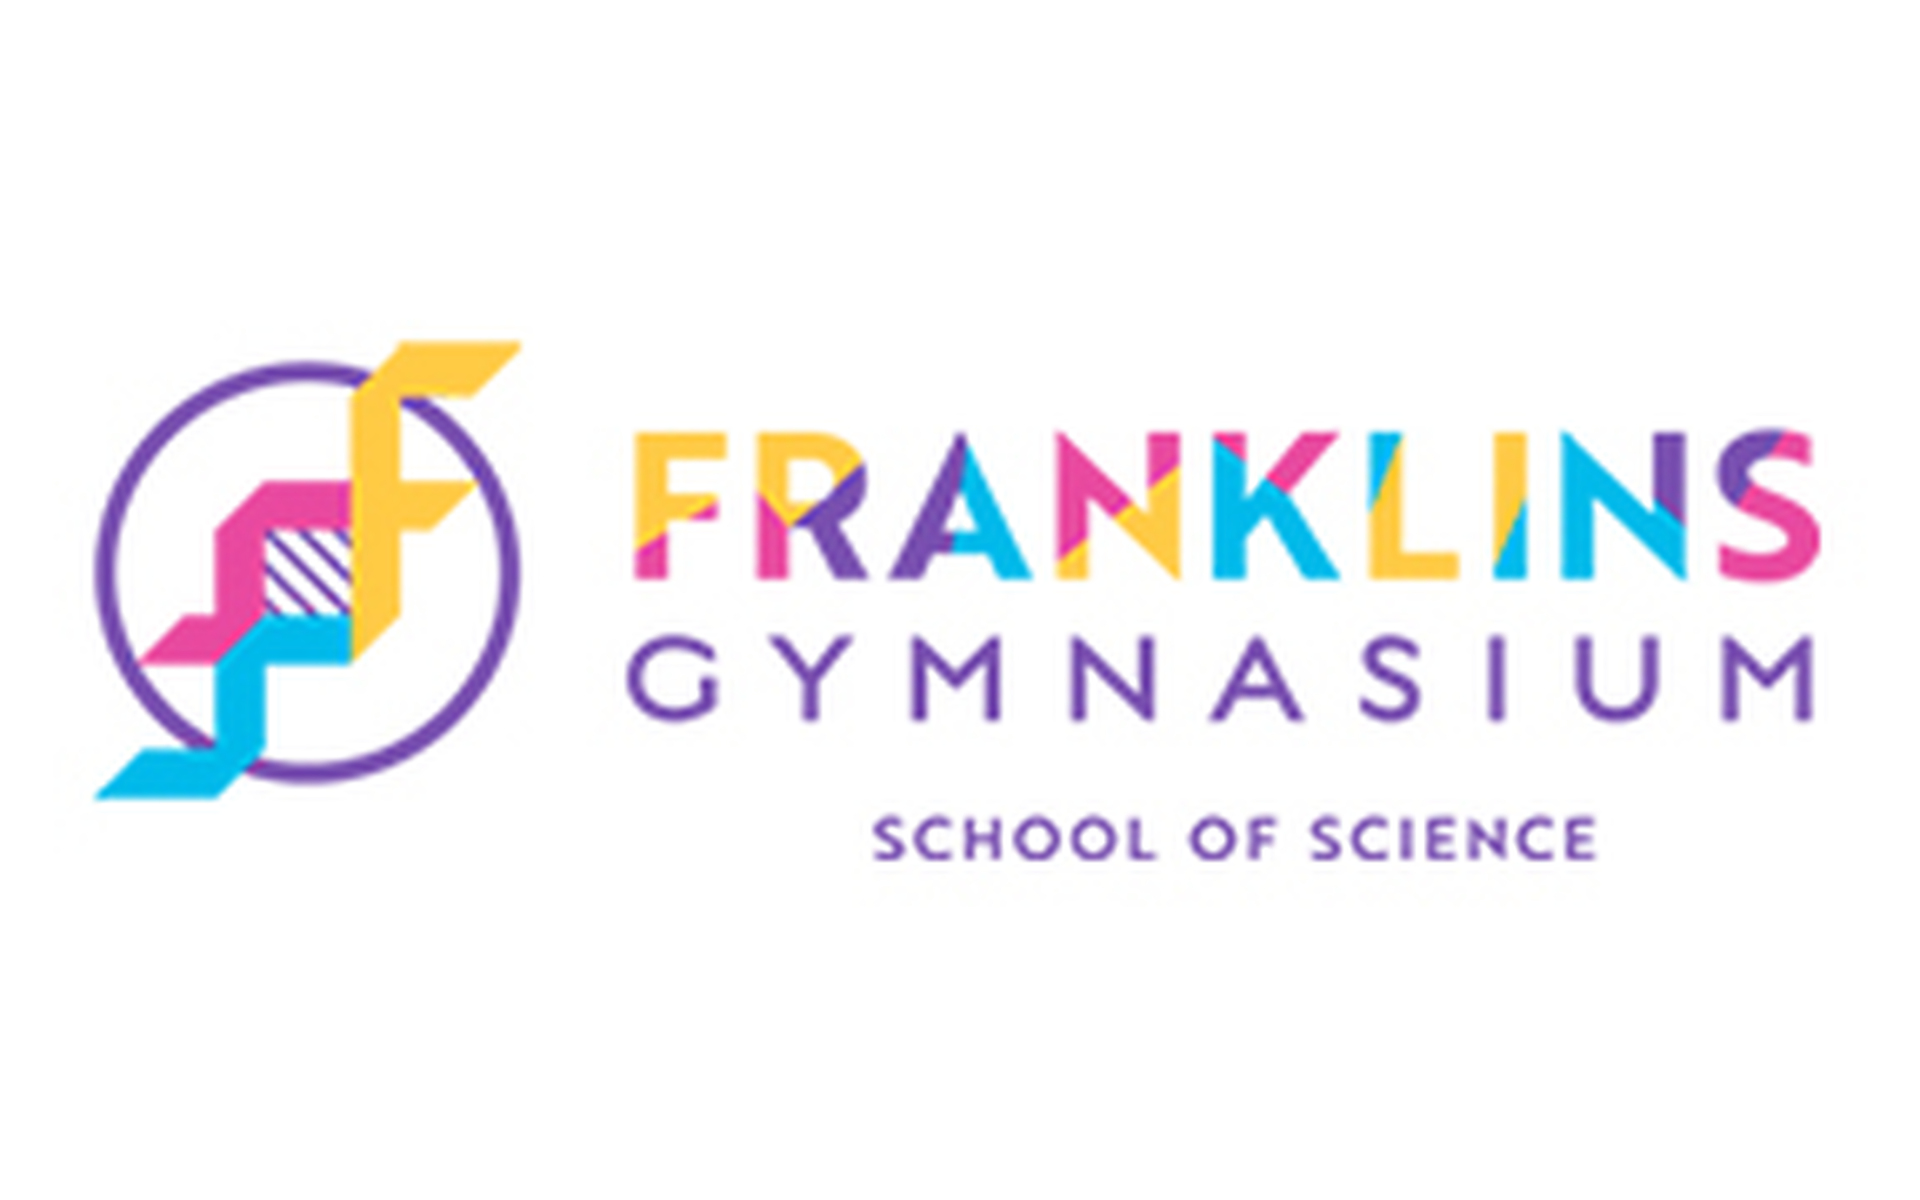 Franklins Gymnasium